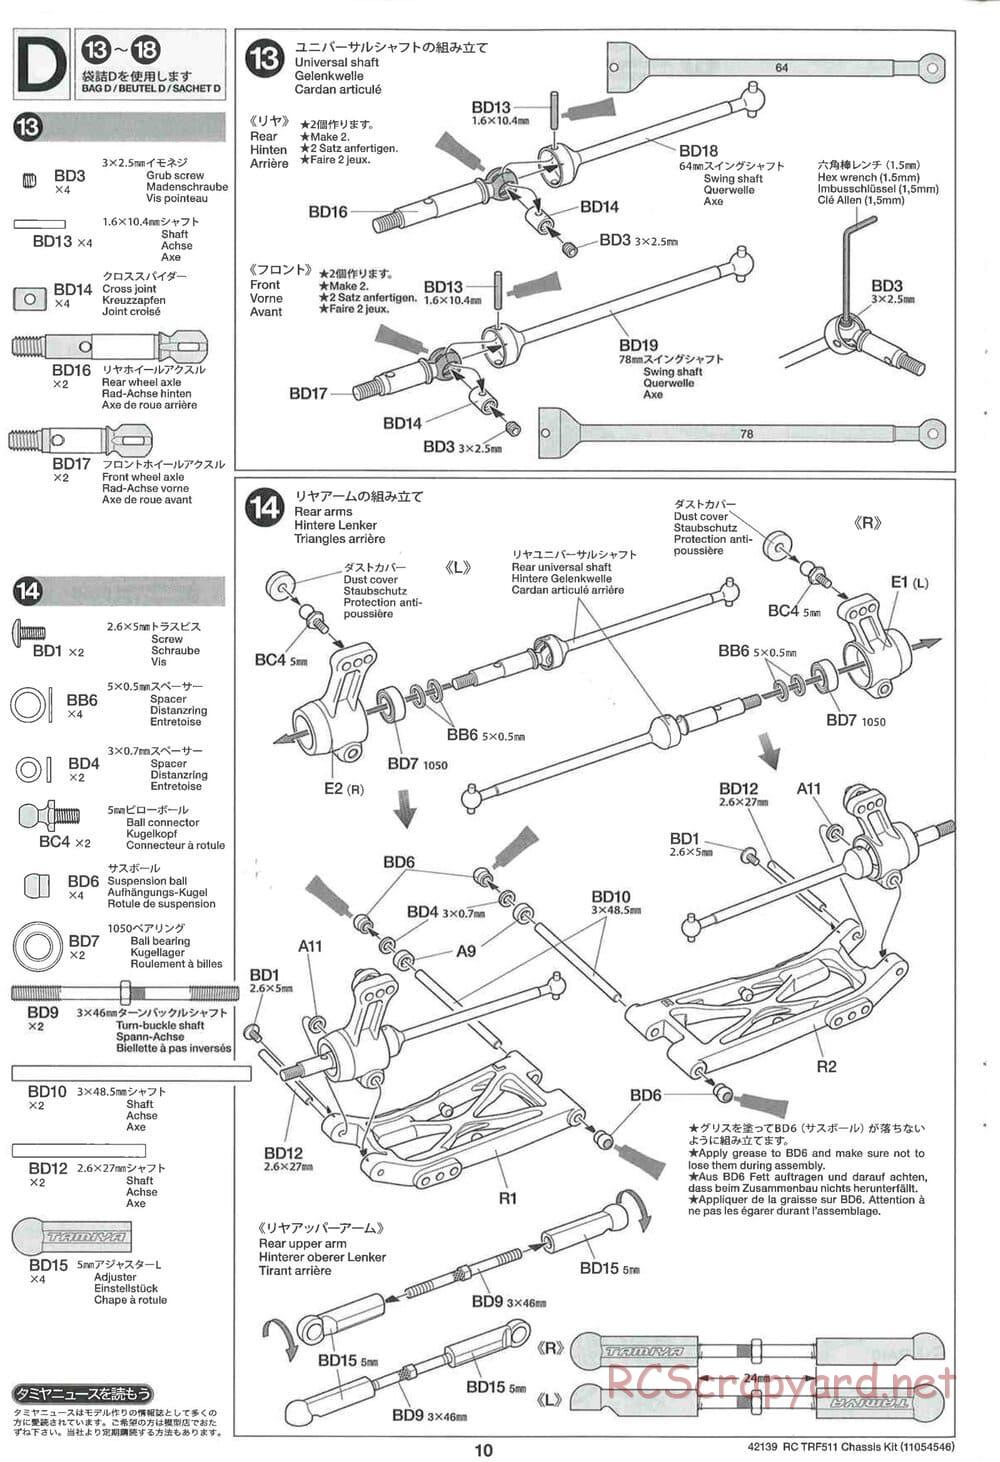 Tamiya - TRF511 Chassis - Manual - Page 10